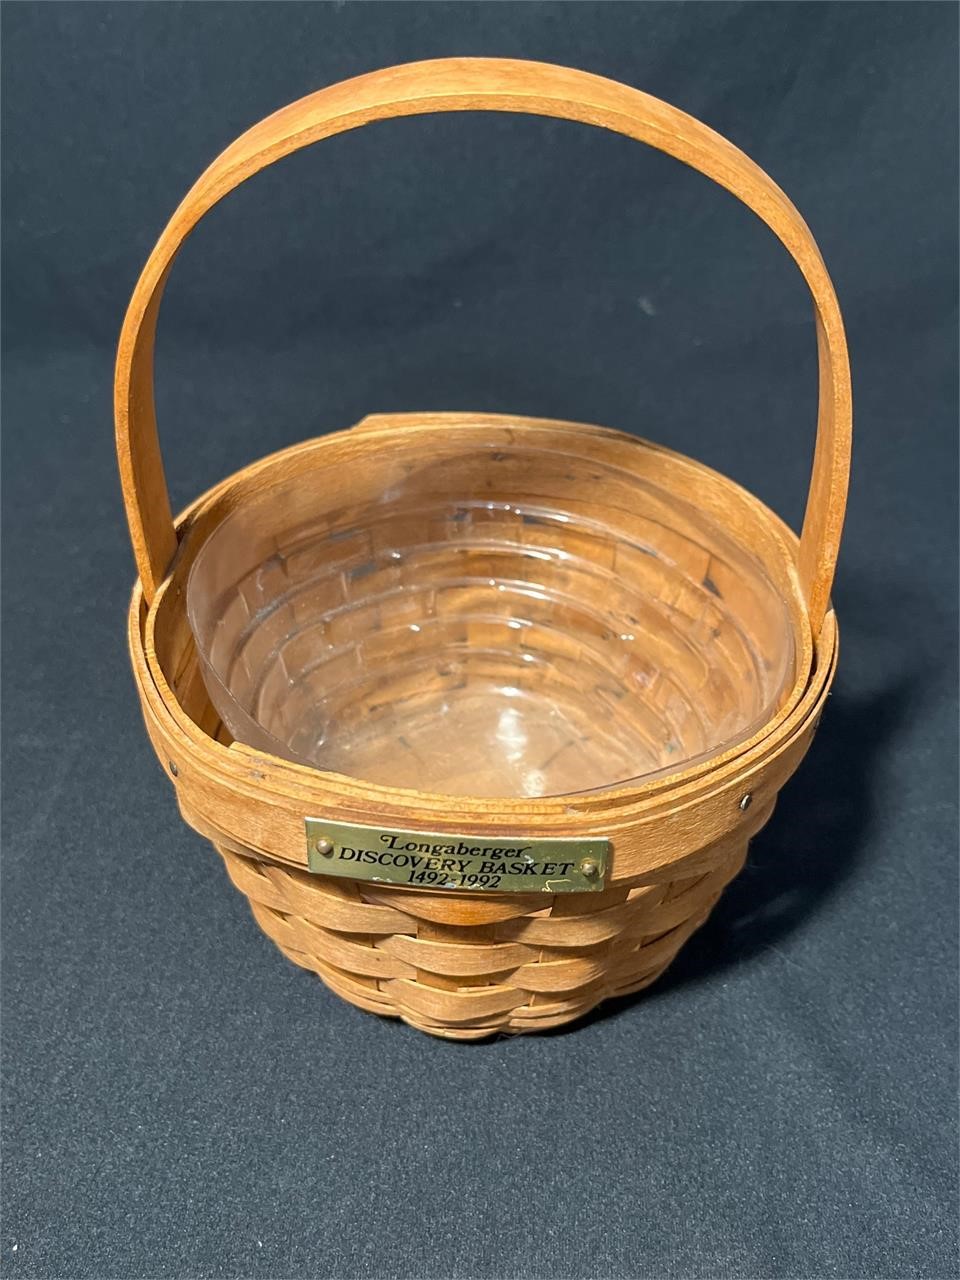 Longaberger Discovery 1492-1992 Handwoven basket.